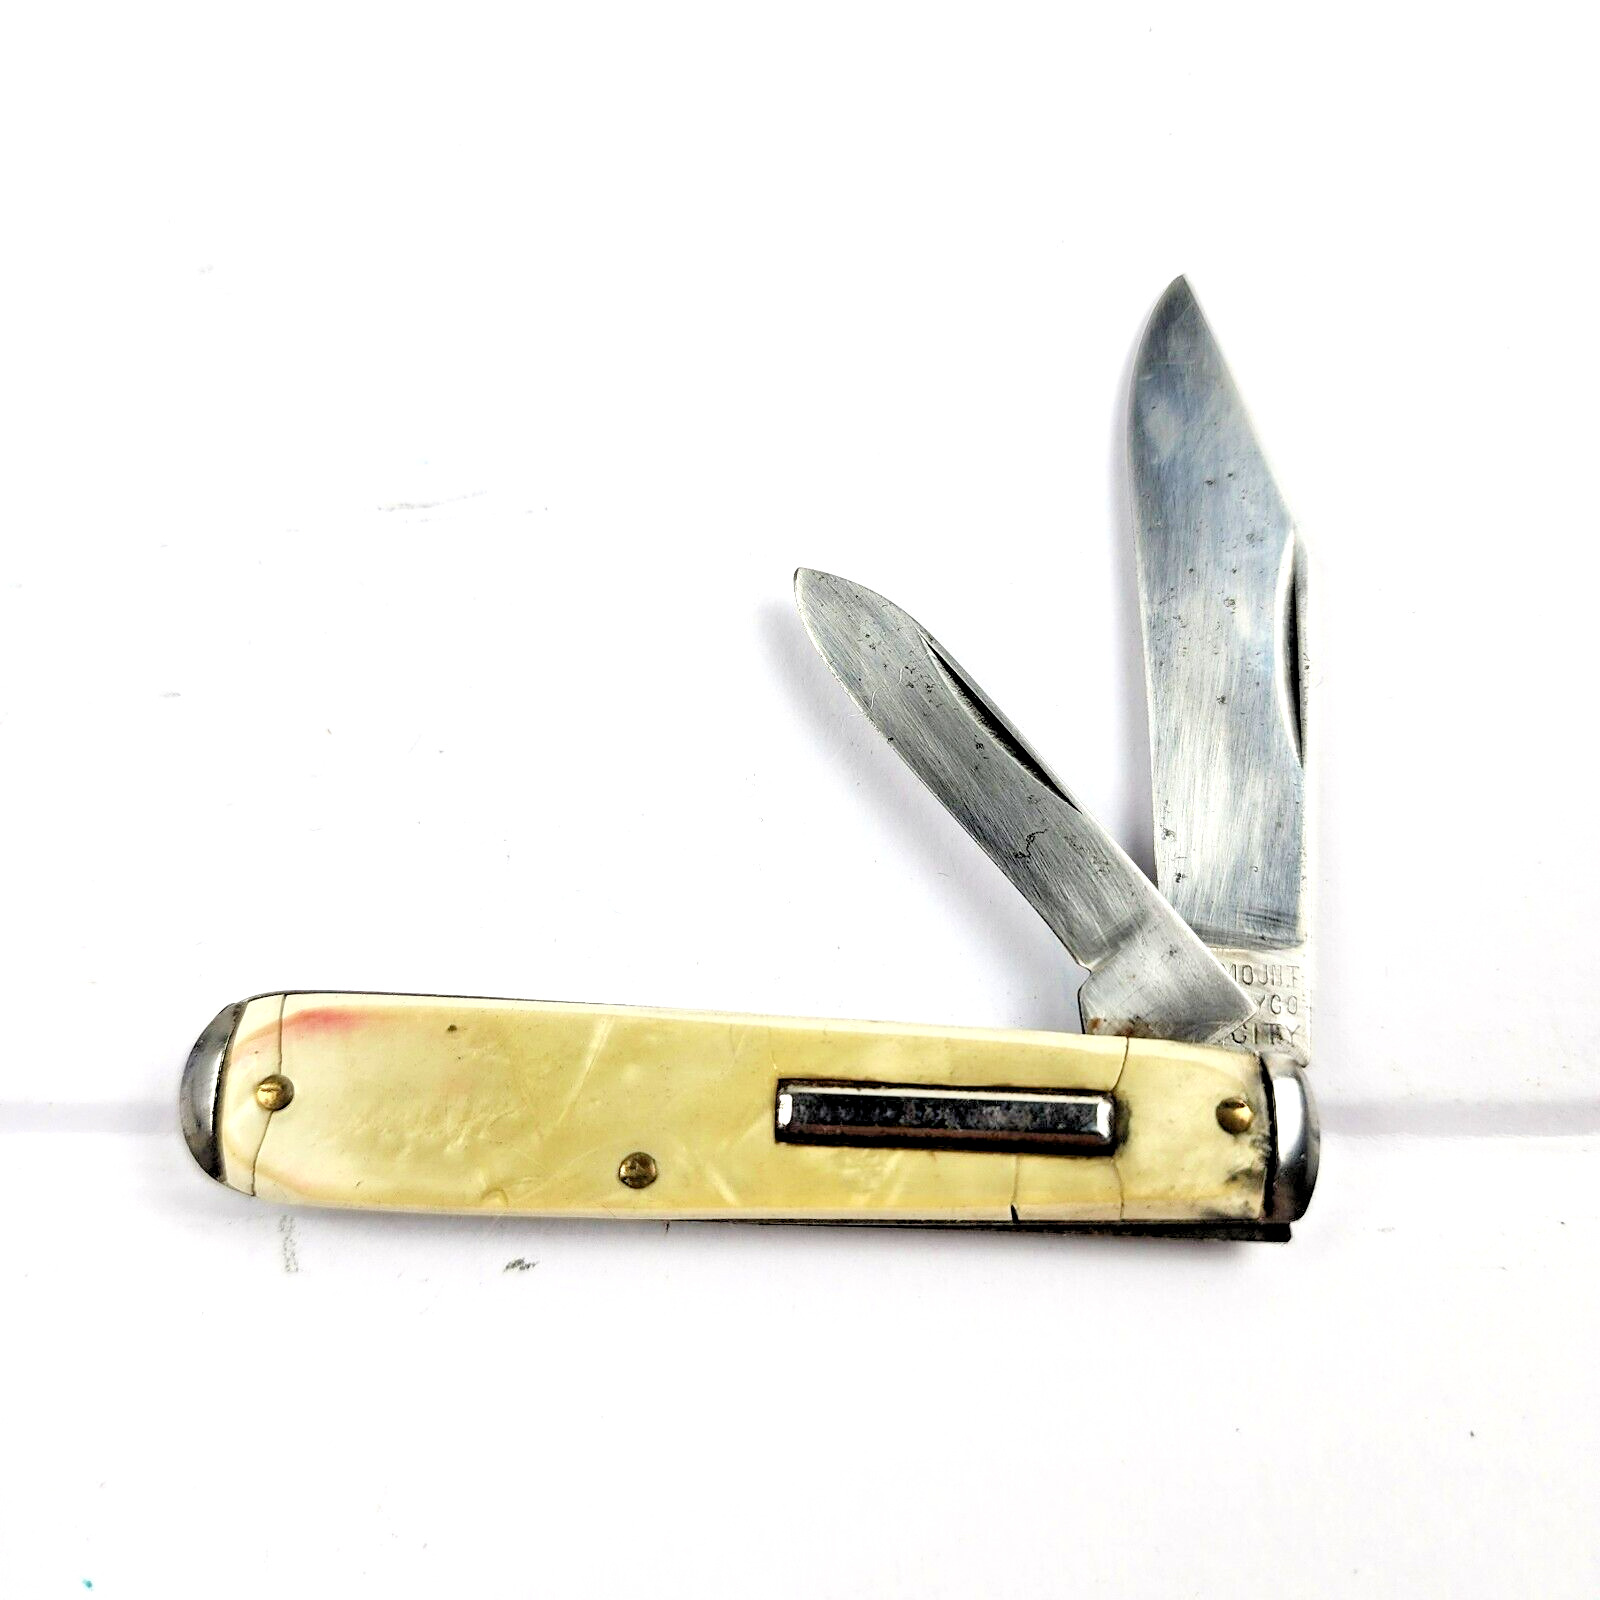 VTG Camillus Brand Fairmount Cutlery, New York City, Pocket Knife, 2 Blade Jack